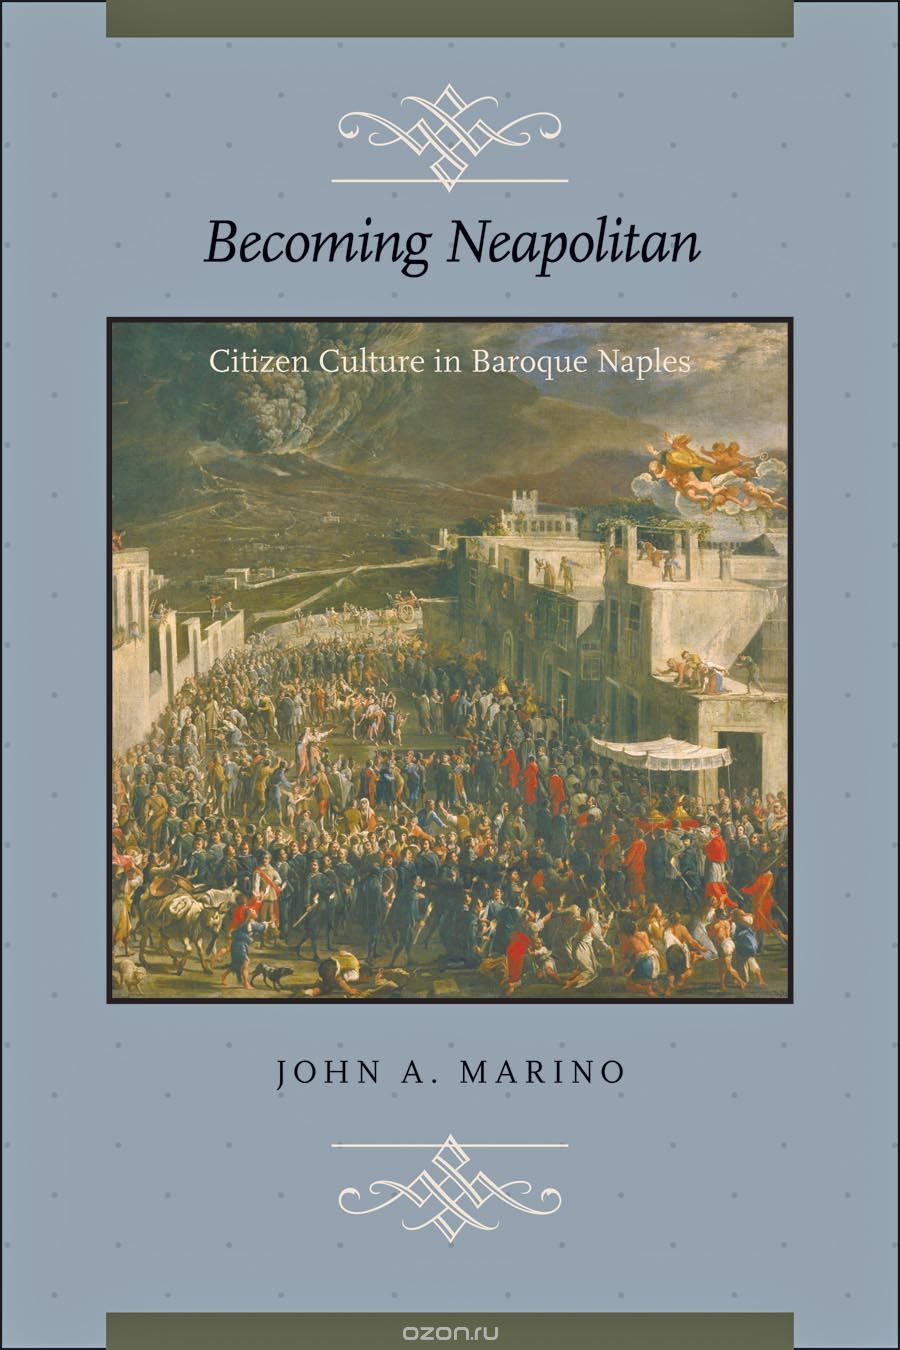 Скачать книгу "Becoming Neapolitan – Citizen Culture in Baroque Naples"